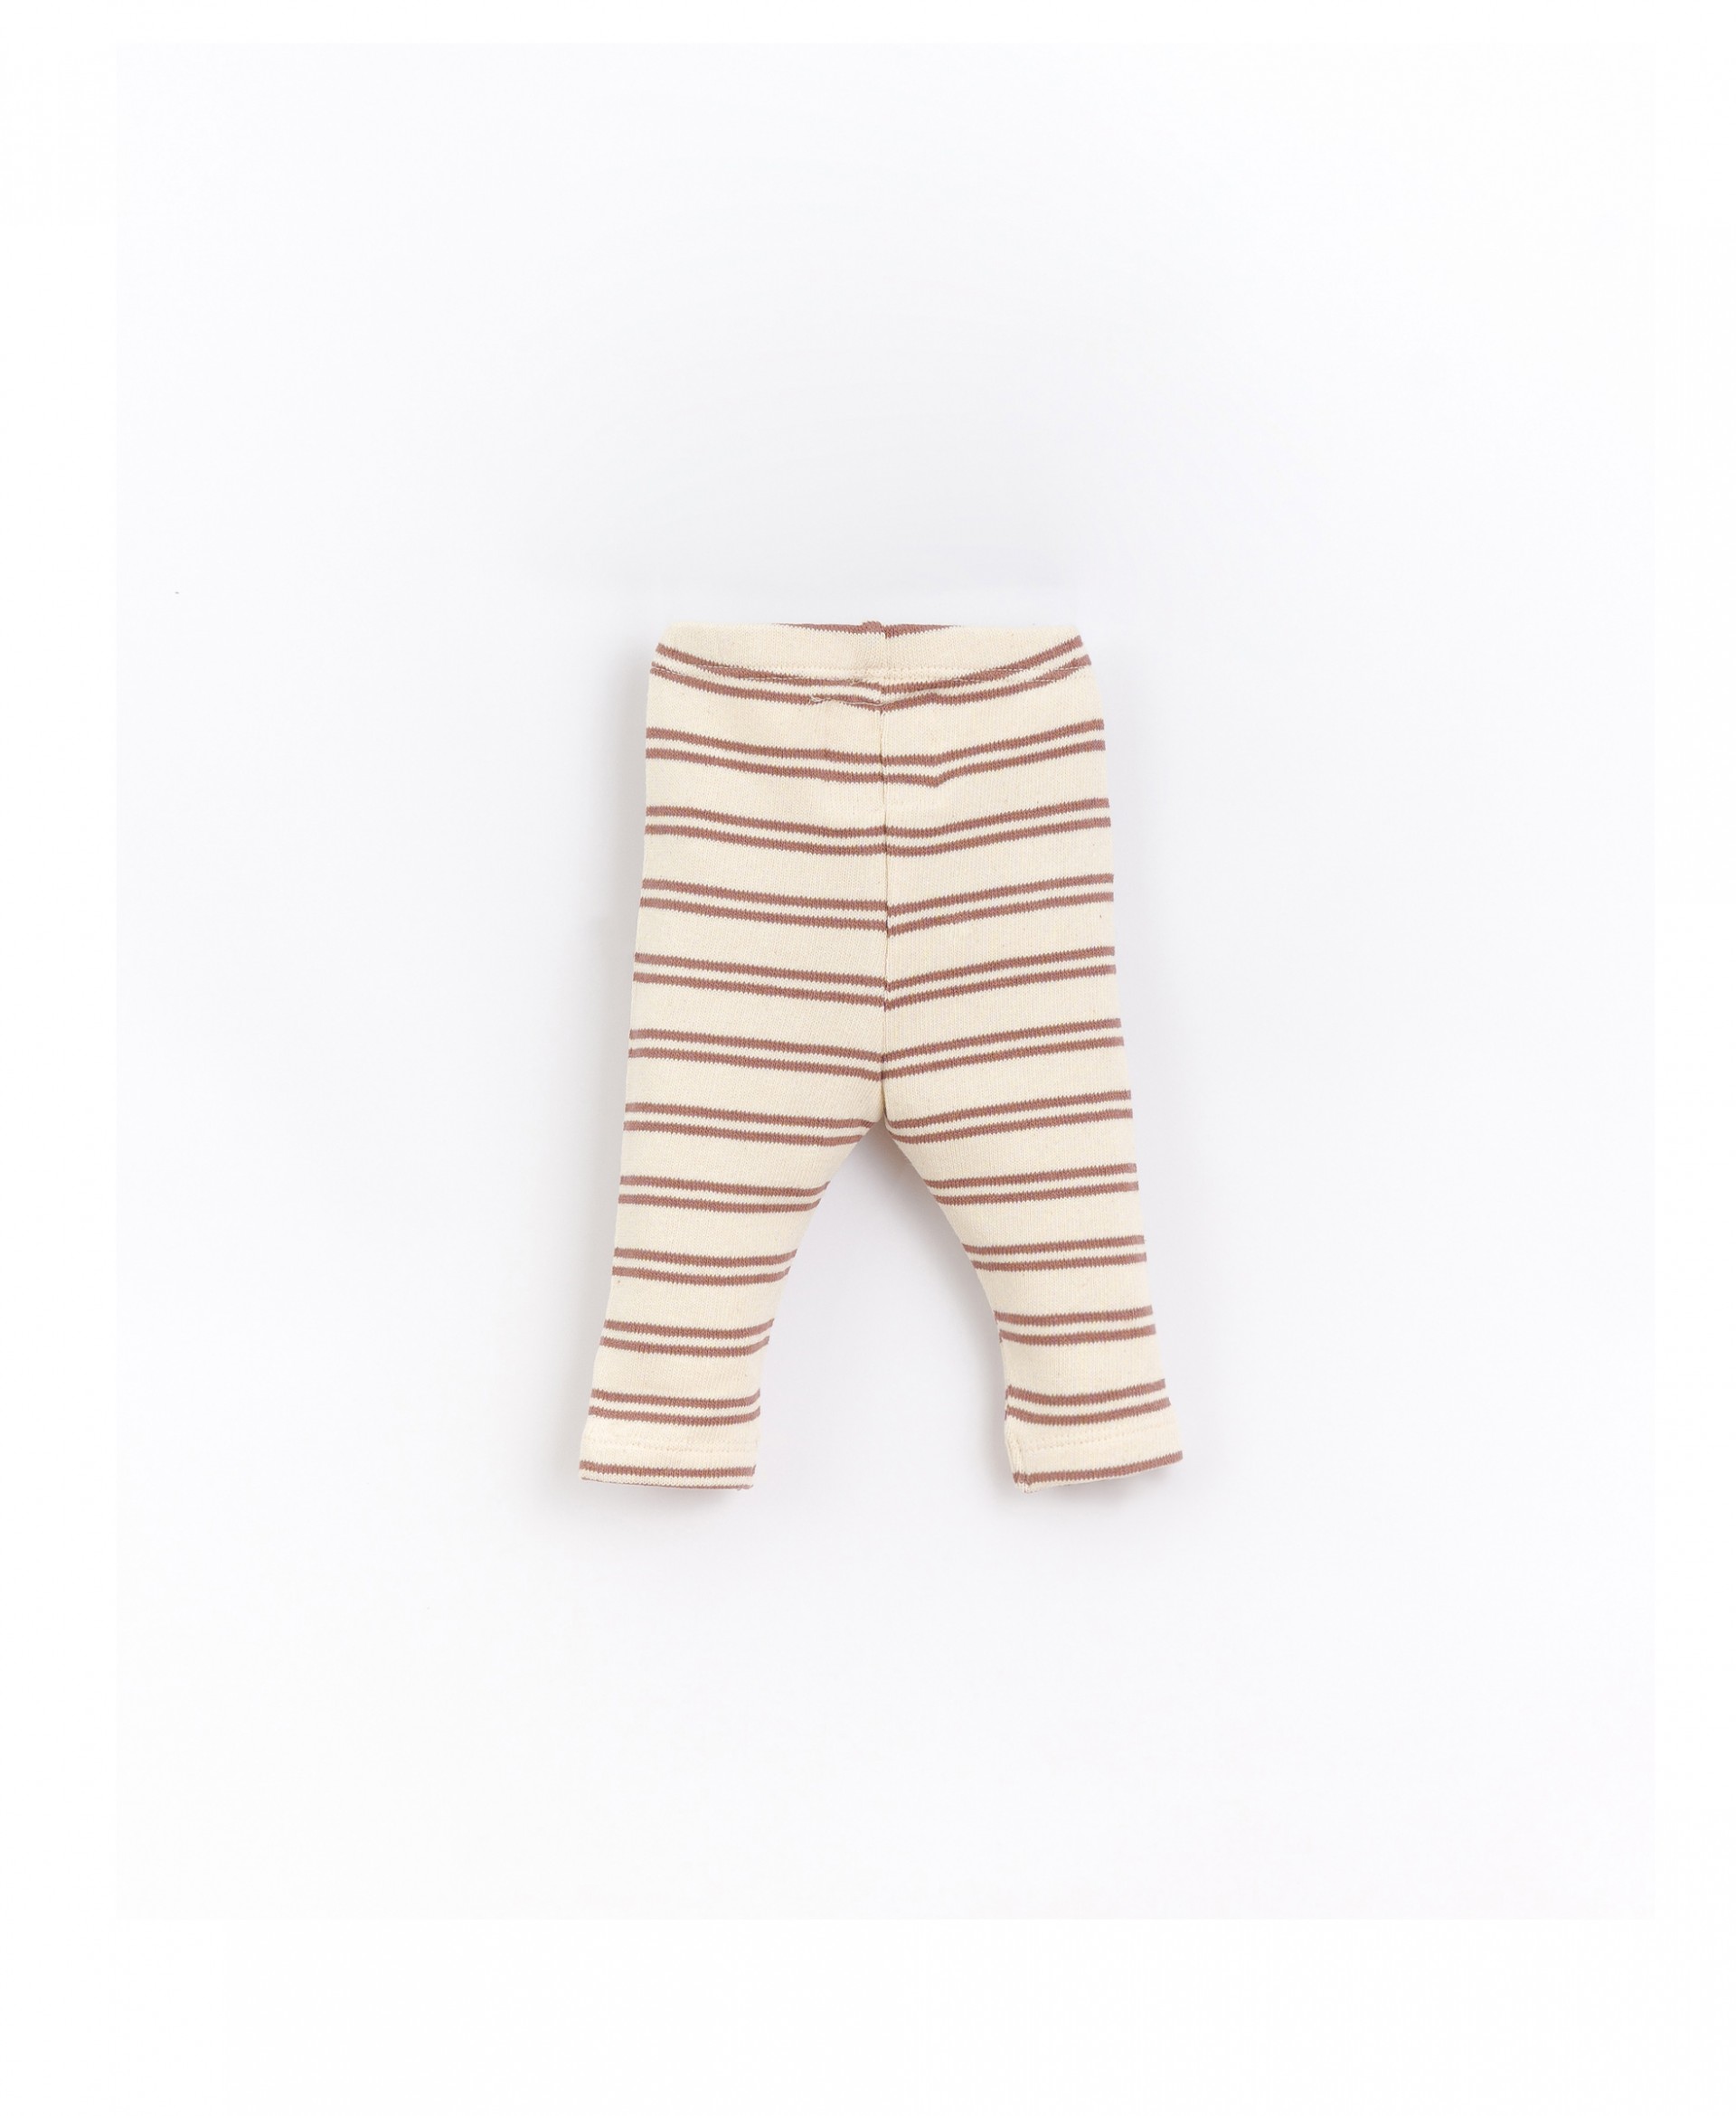 Leggings in striped recyled fibers | Basketry